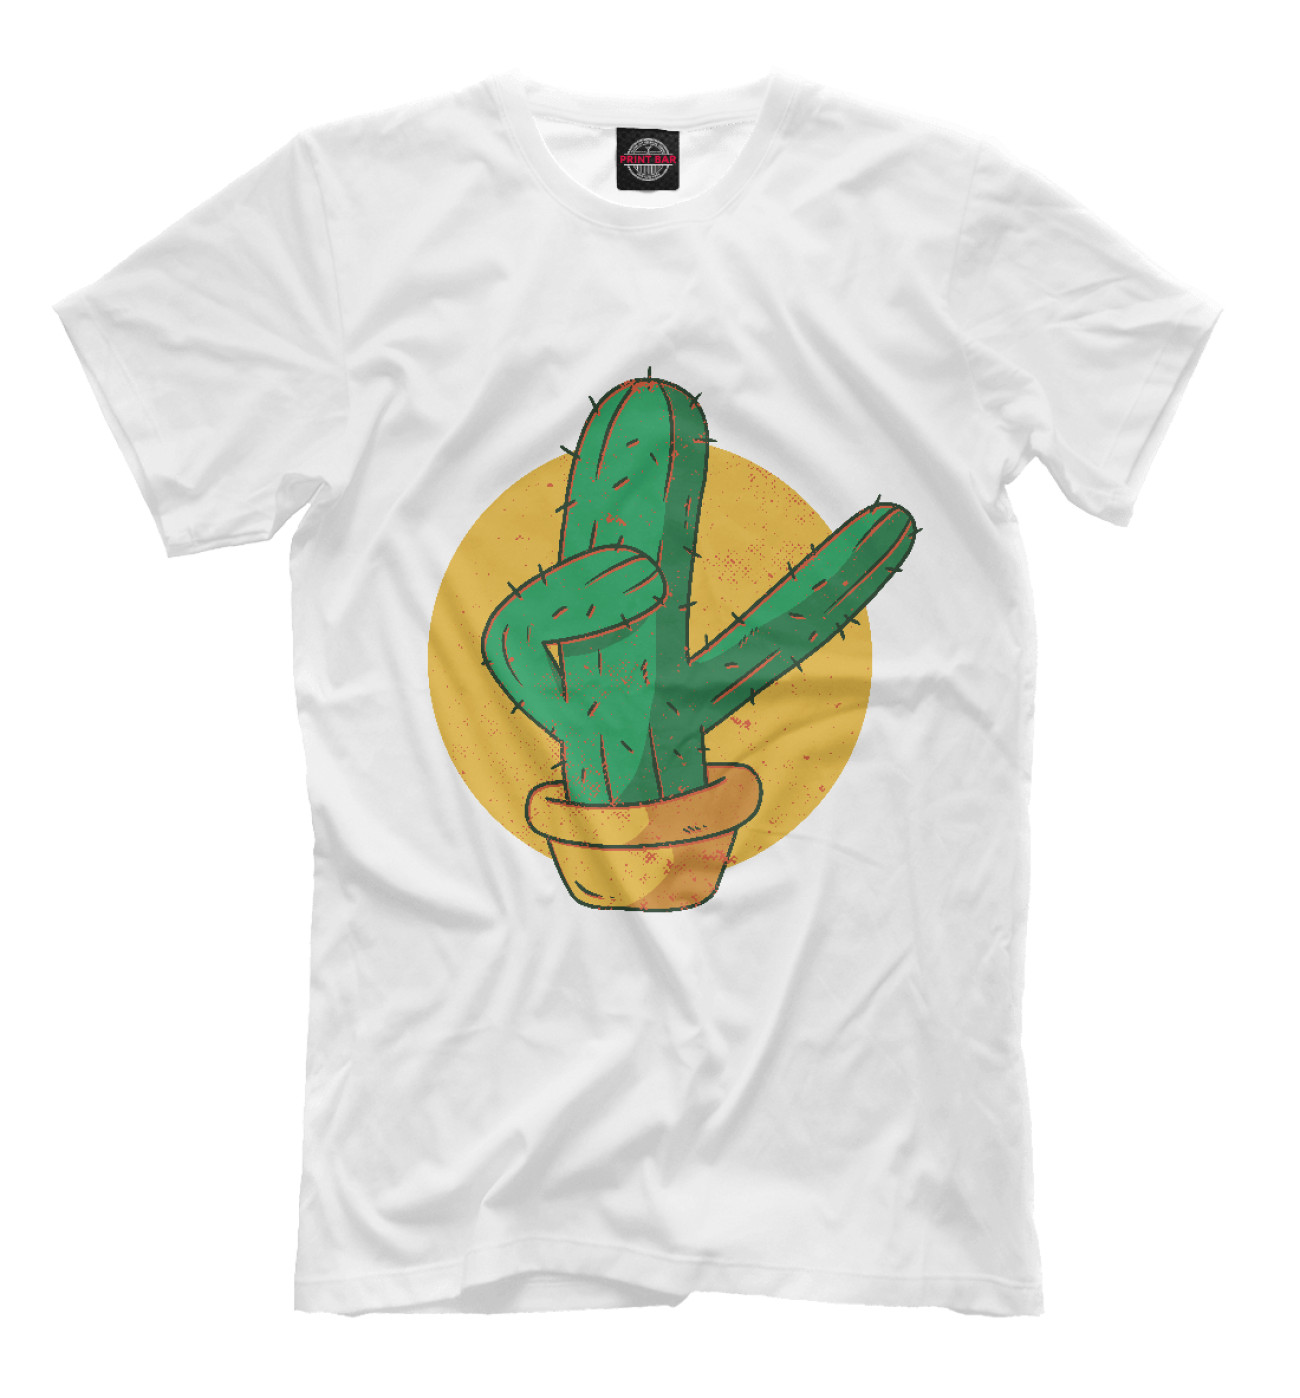 Мужская Футболка Dabbing cactus, артикул: DAB-868643-fut-2